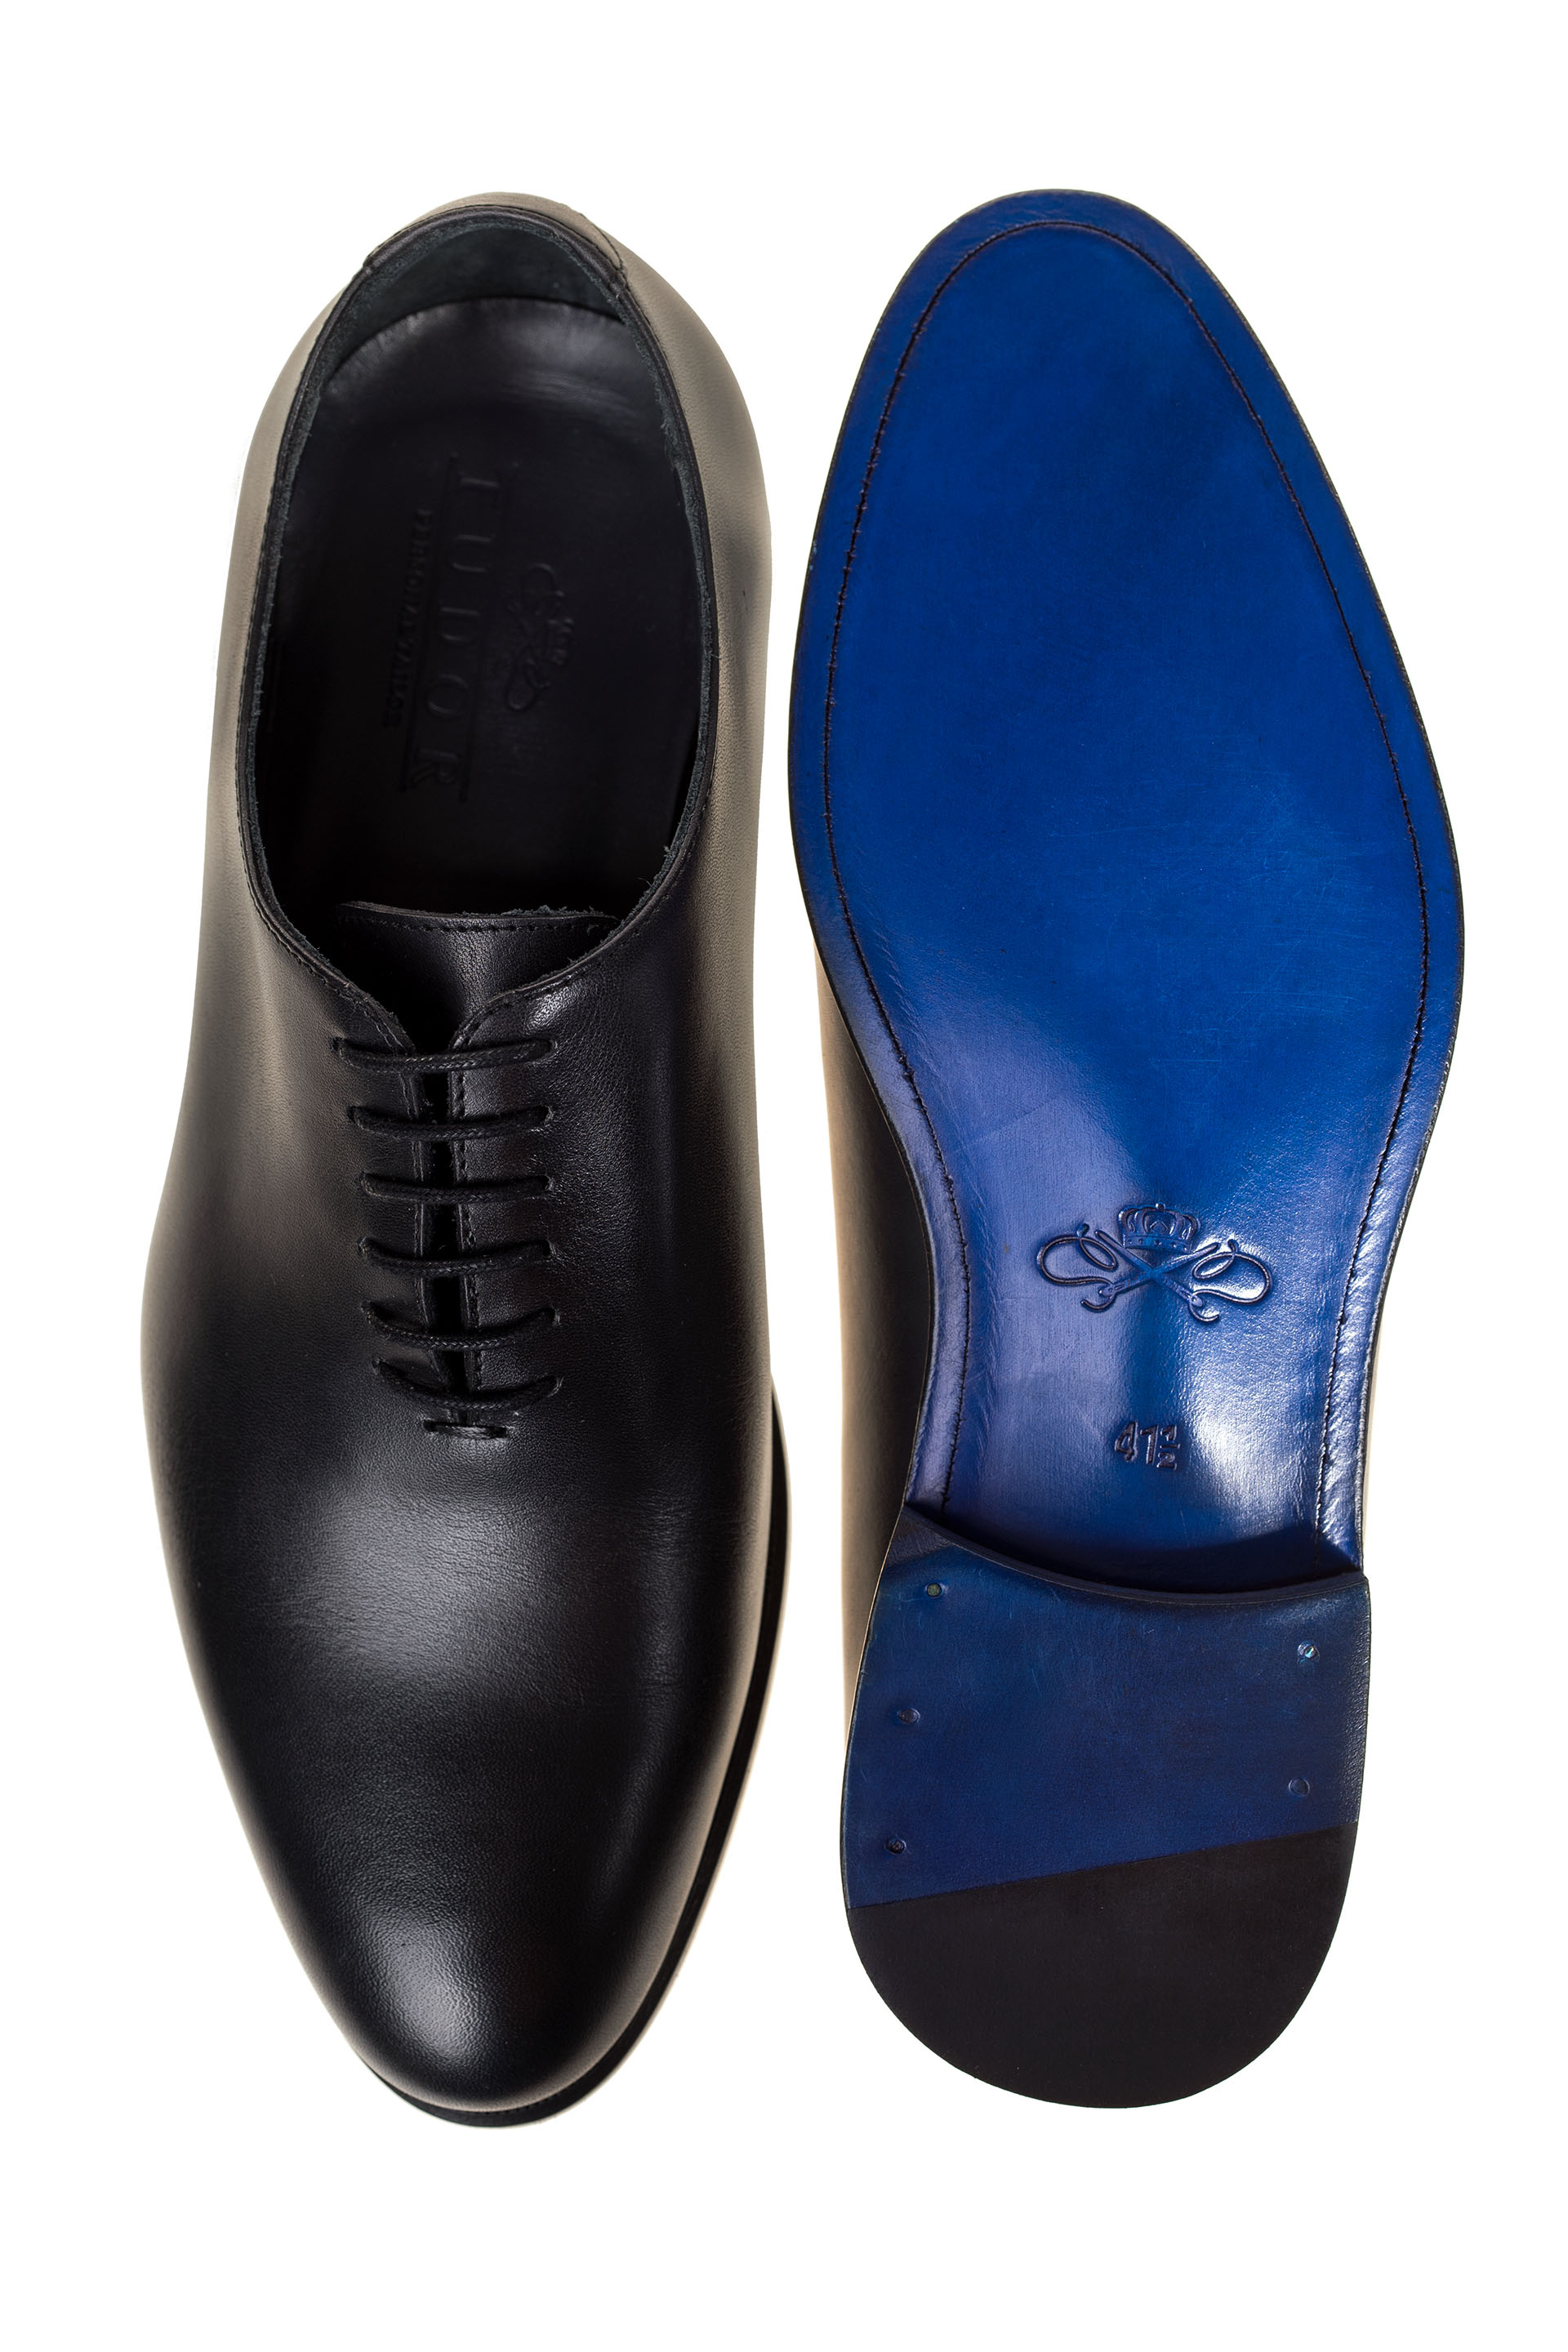 Elegant Men's Oxford Black Leather Shoes - Tudor Tailor